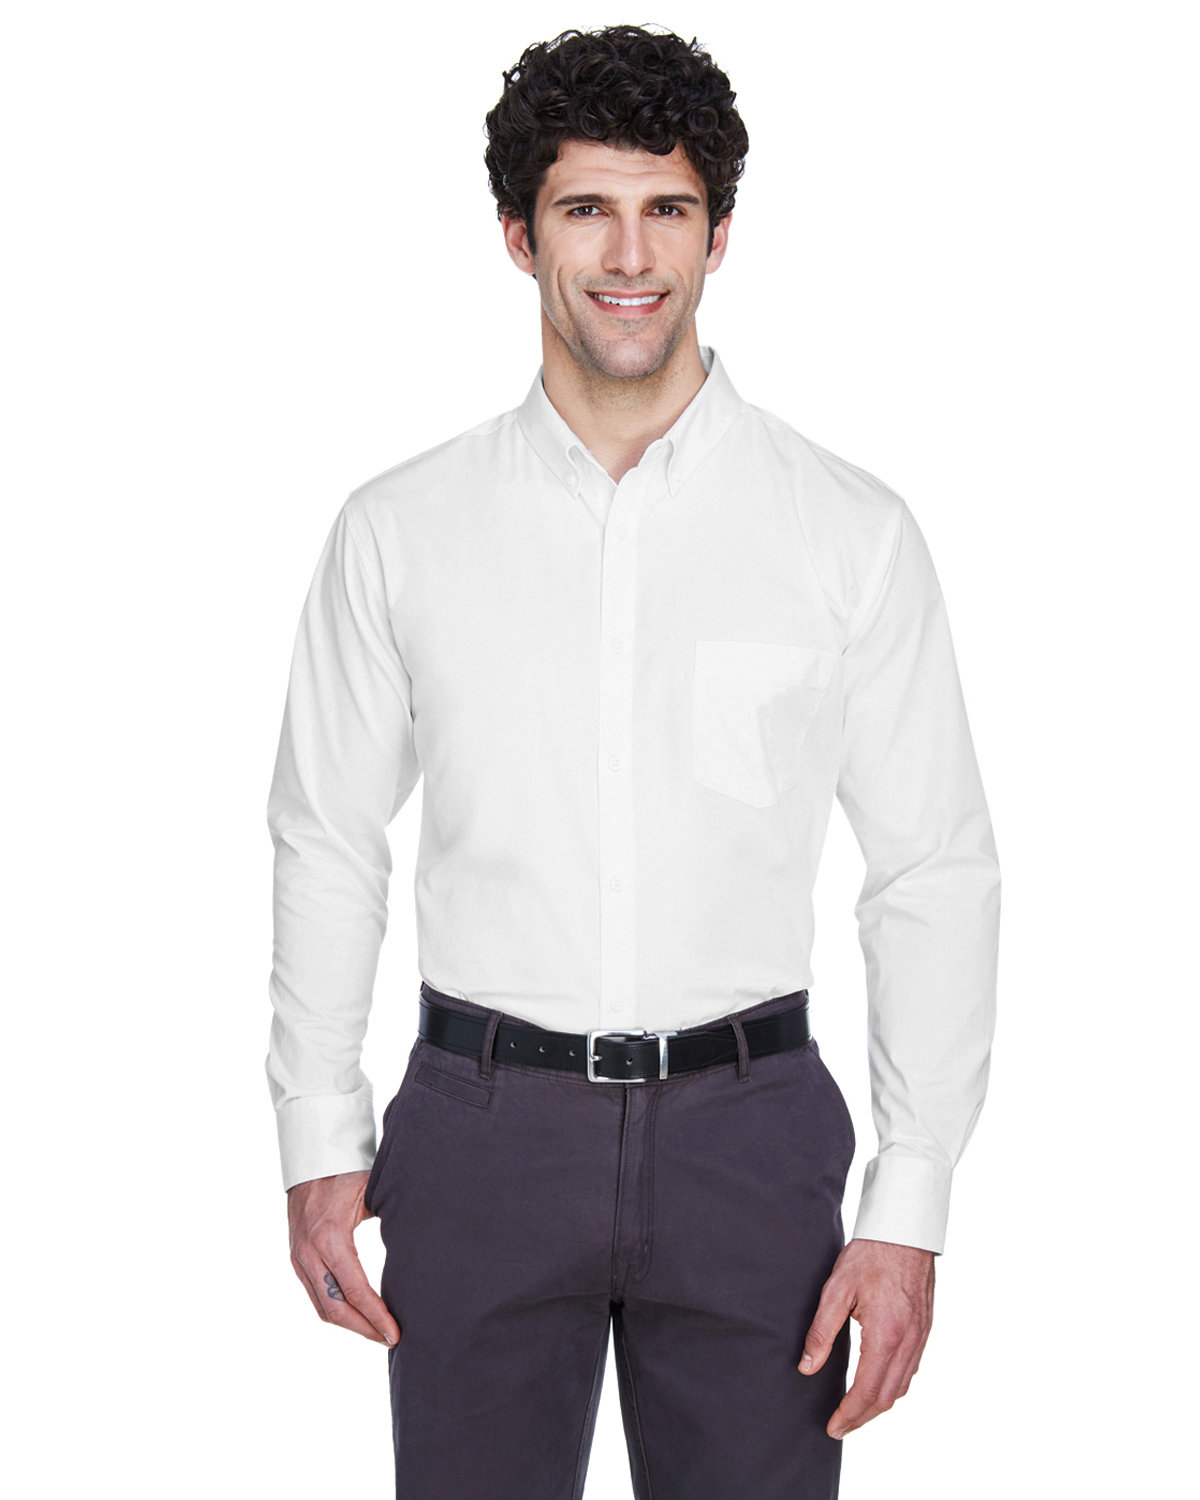 Core 365 88193T - Men's Tall Operate Long Sleeve Twill Shirt